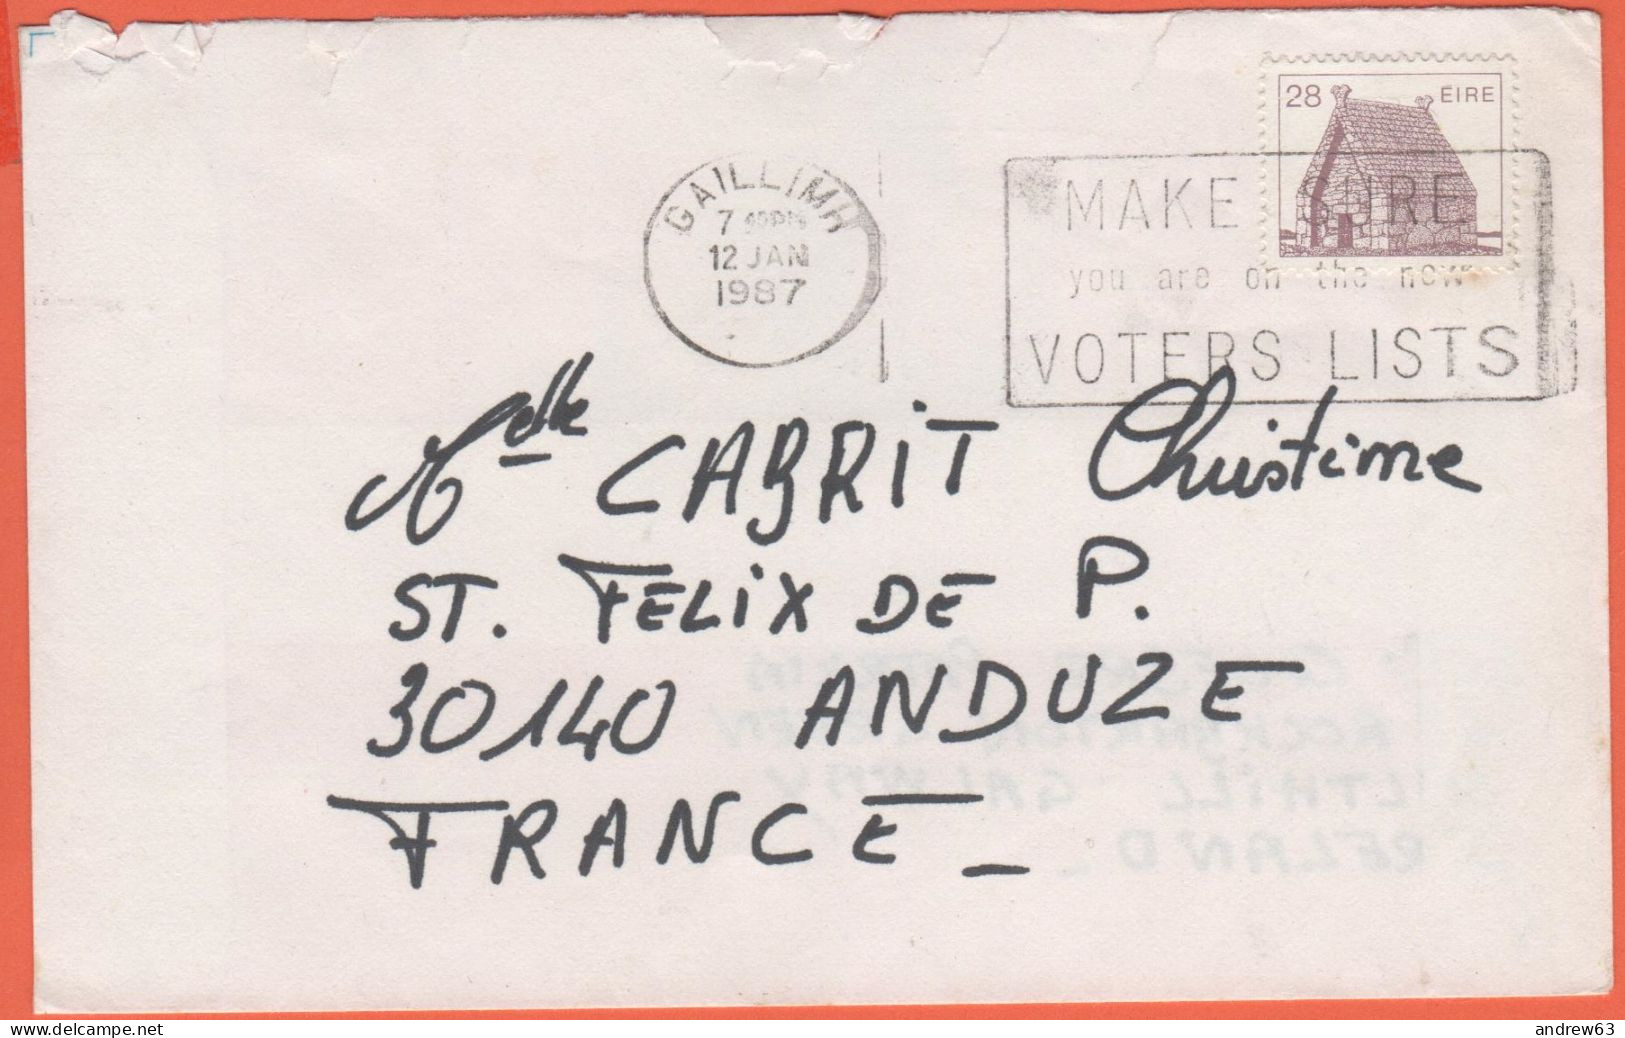 IRLANDA - IRELAND - Irlande - EIRE - 1987 - 28 - Viaggiata Da Gaillimh Per Anduze, France - Covers & Documents